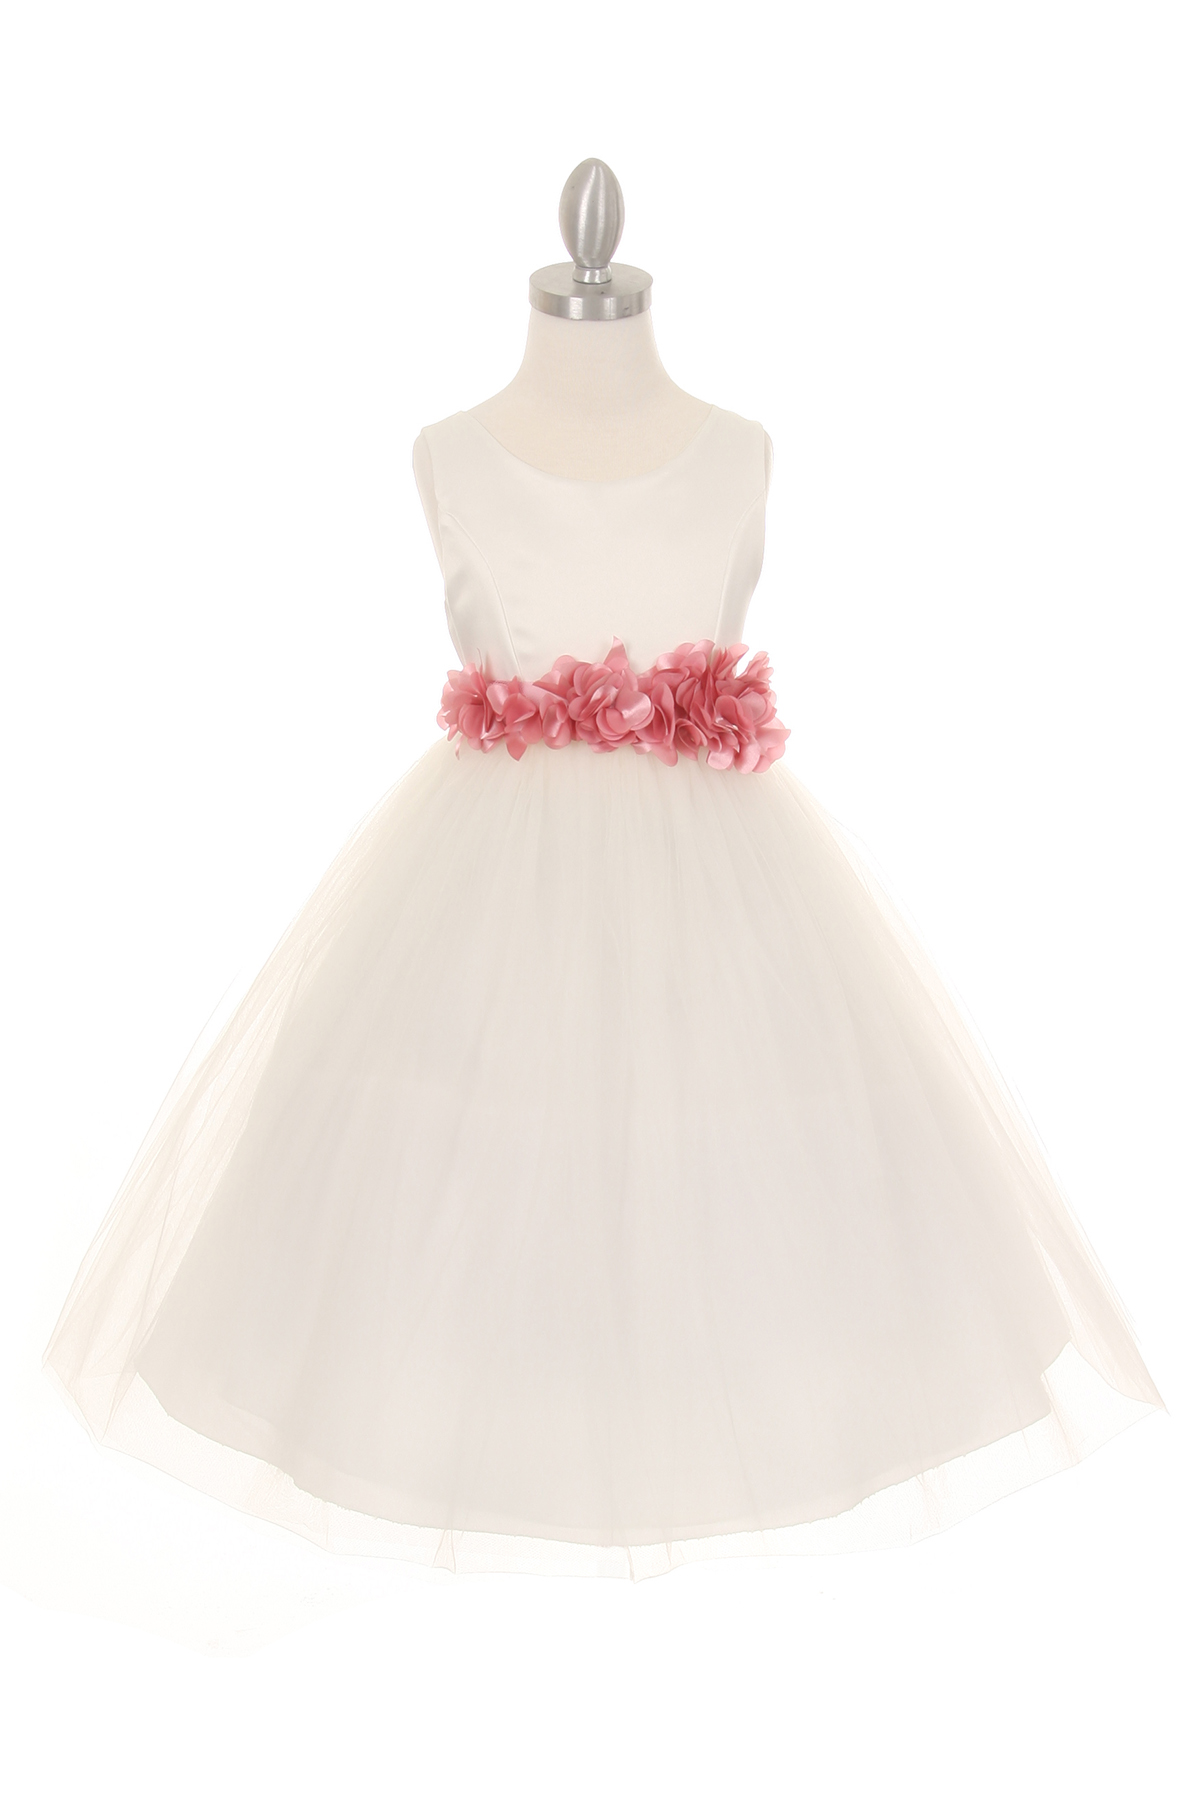 ivory dress with dusty rose flower sash